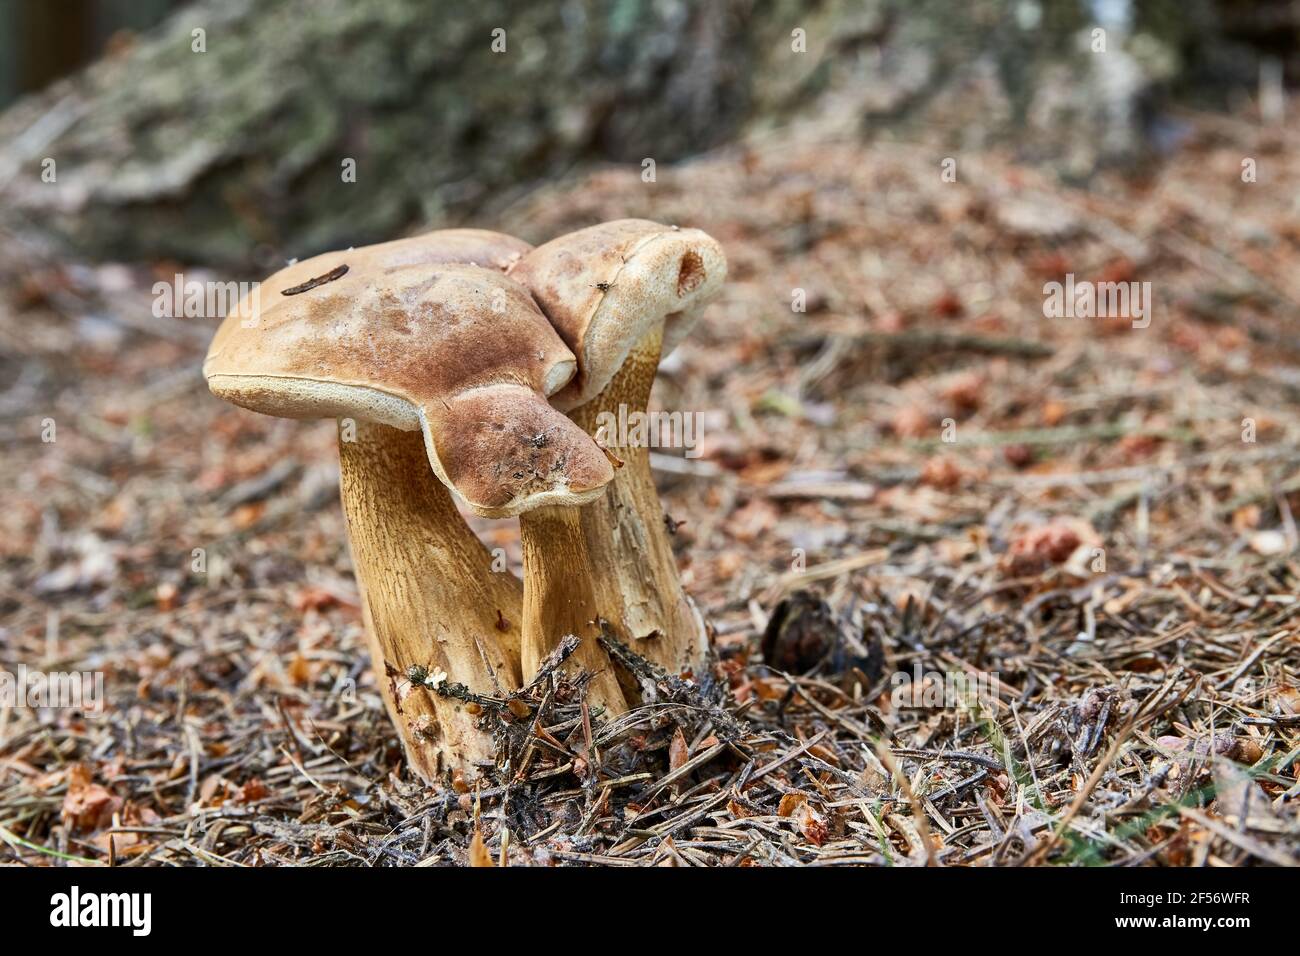 Tylopilus felleus - inedible mushroom. Fungus in the natural environment. English: bitter bolete, bitter tylopilus Stock Photo